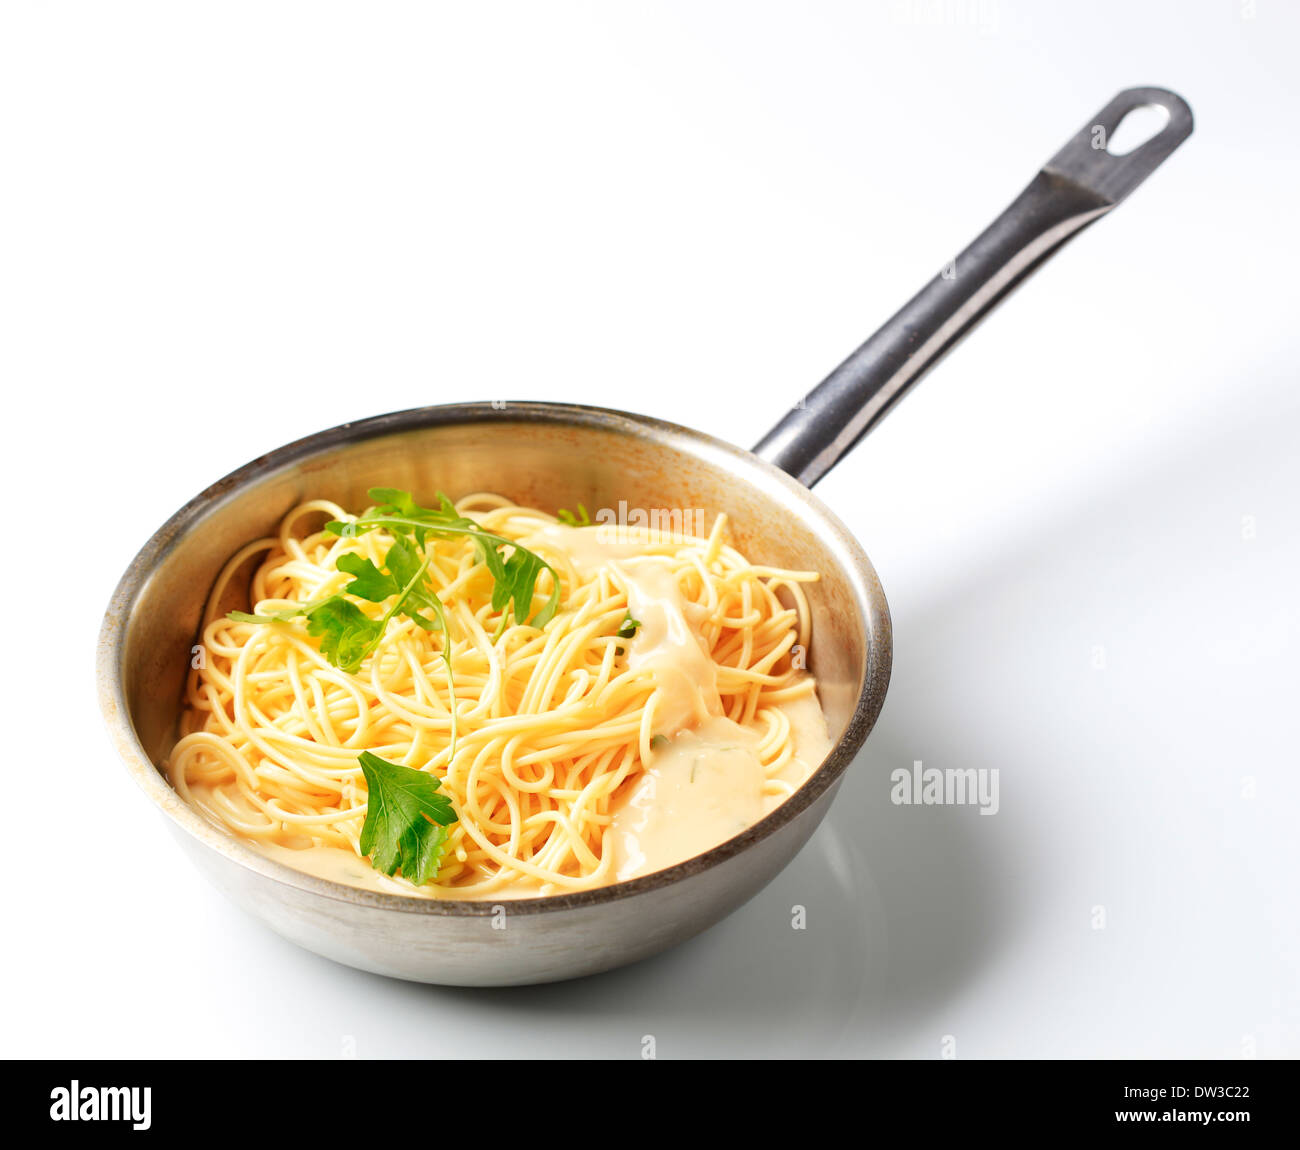 Spaghetti and creamy sauce in a saucepan Stock Photo